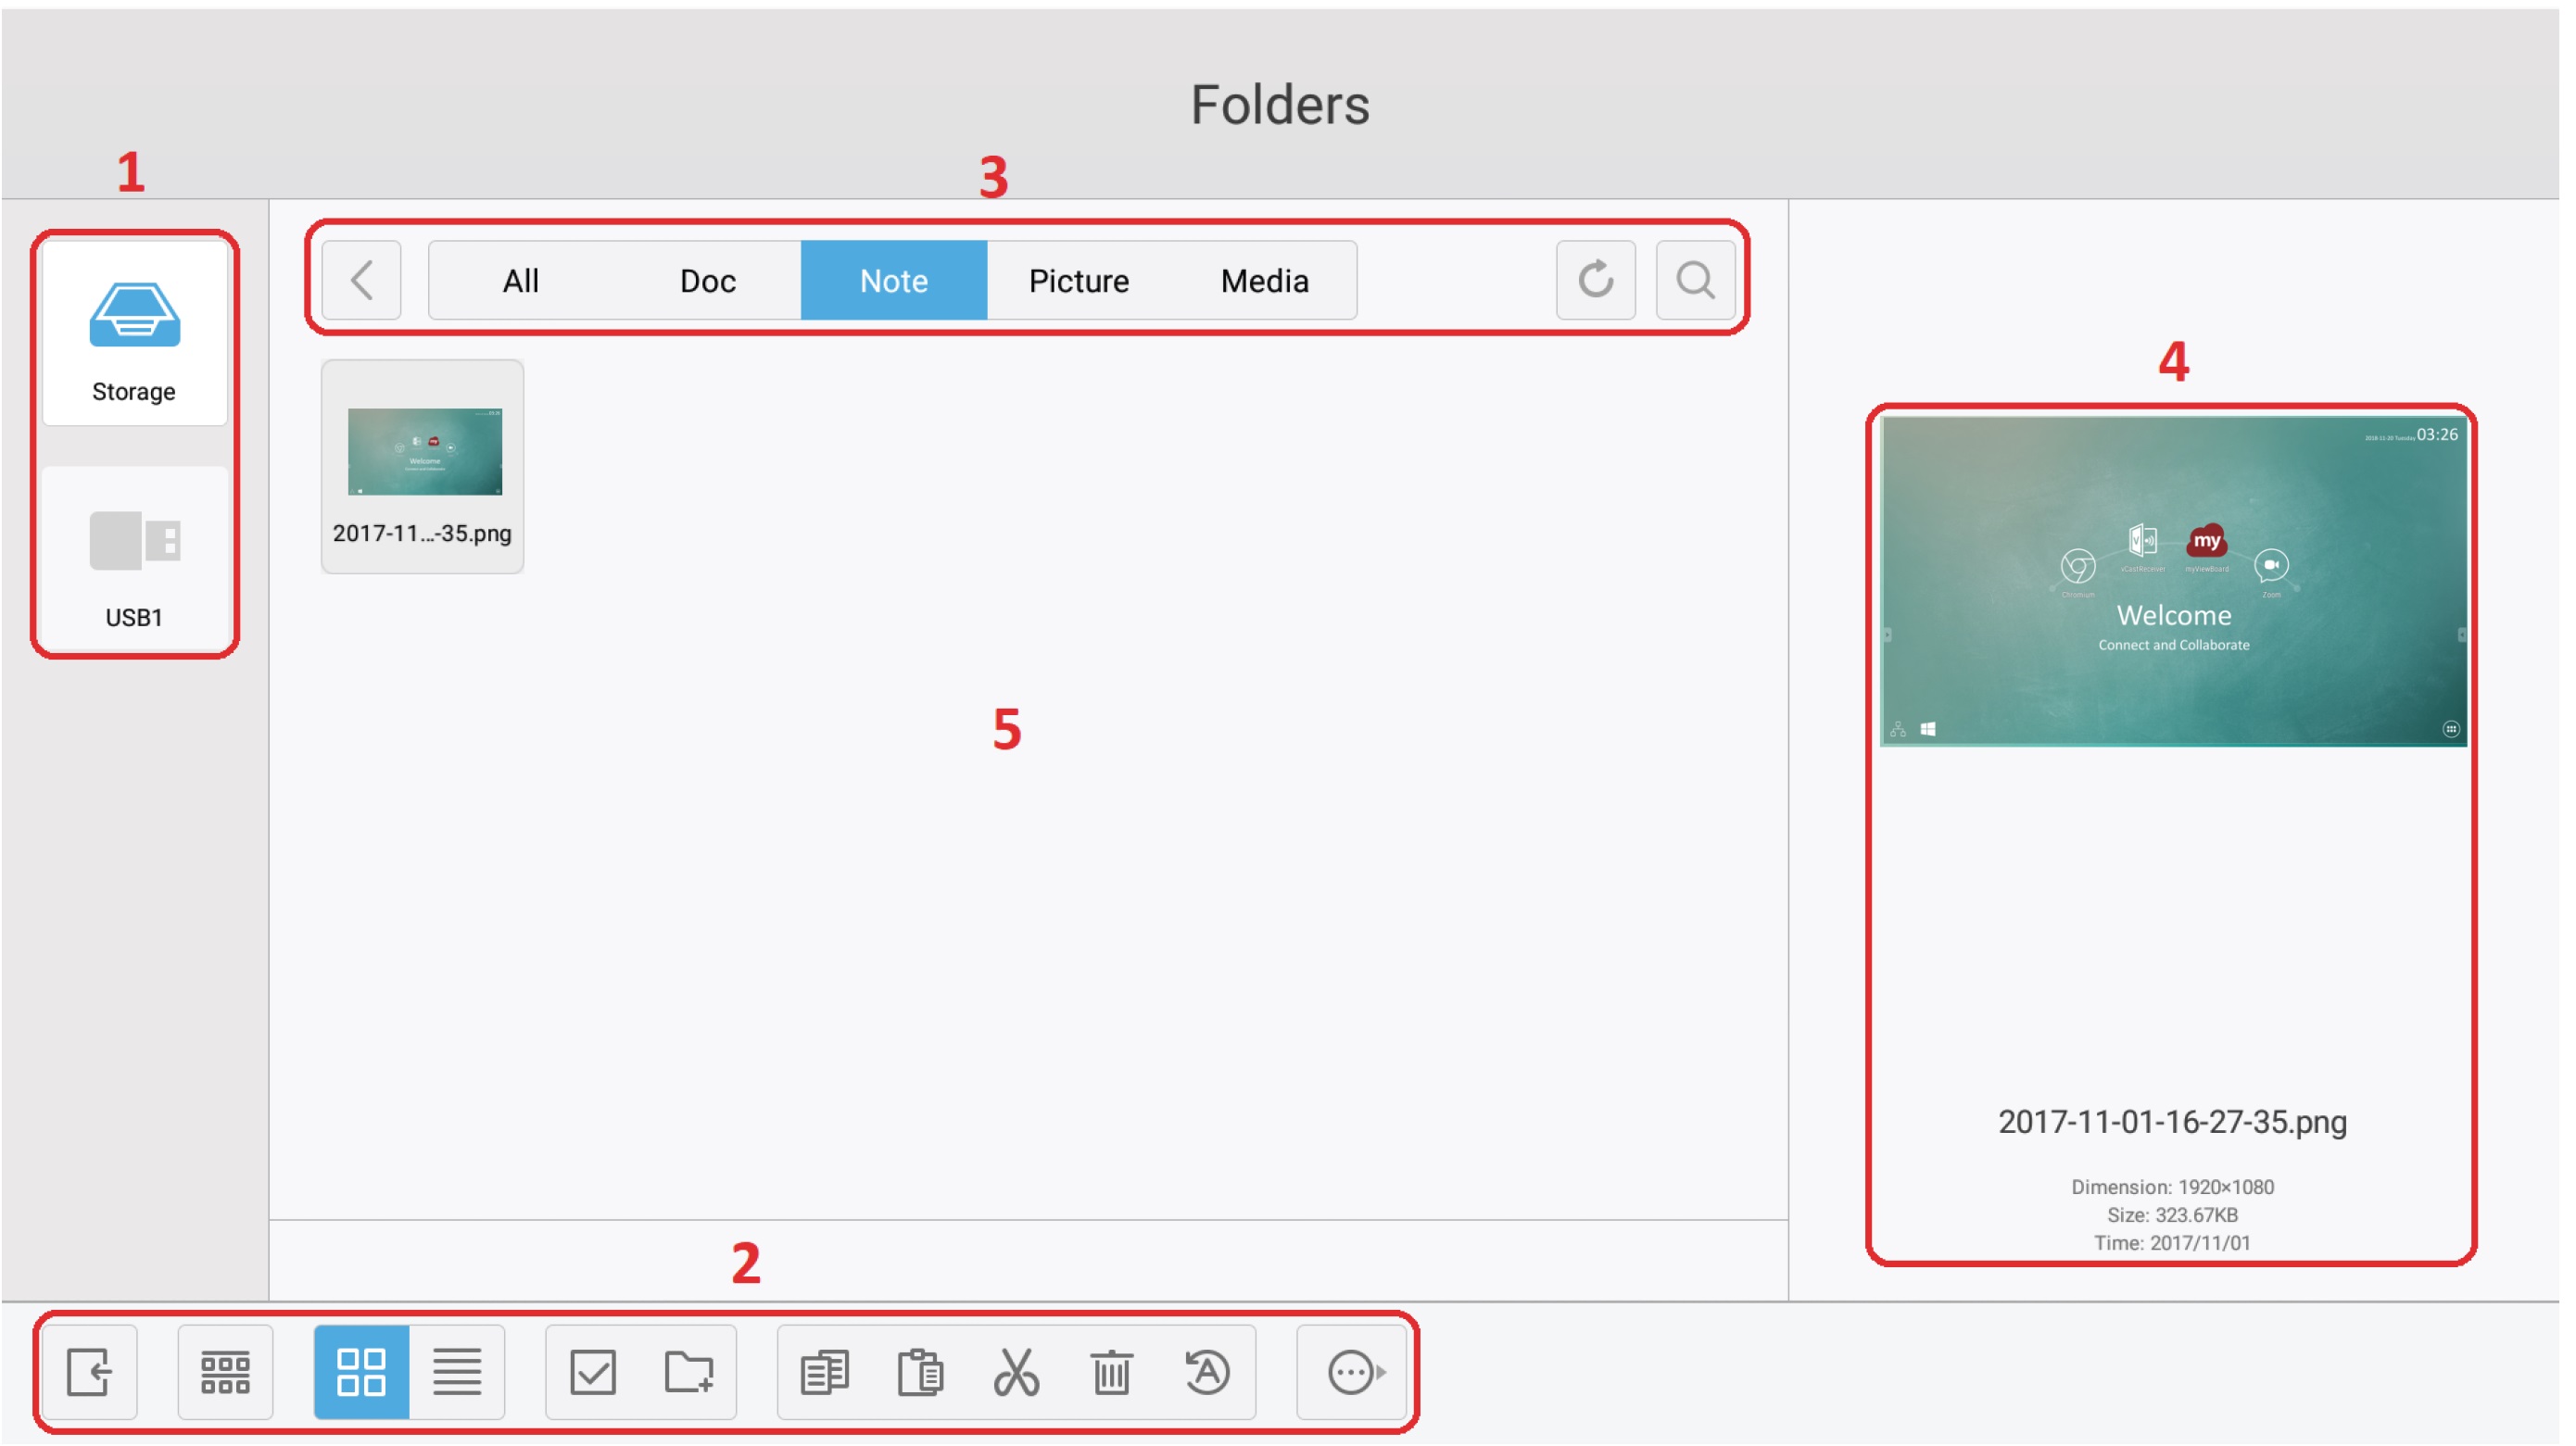 Folders Overview